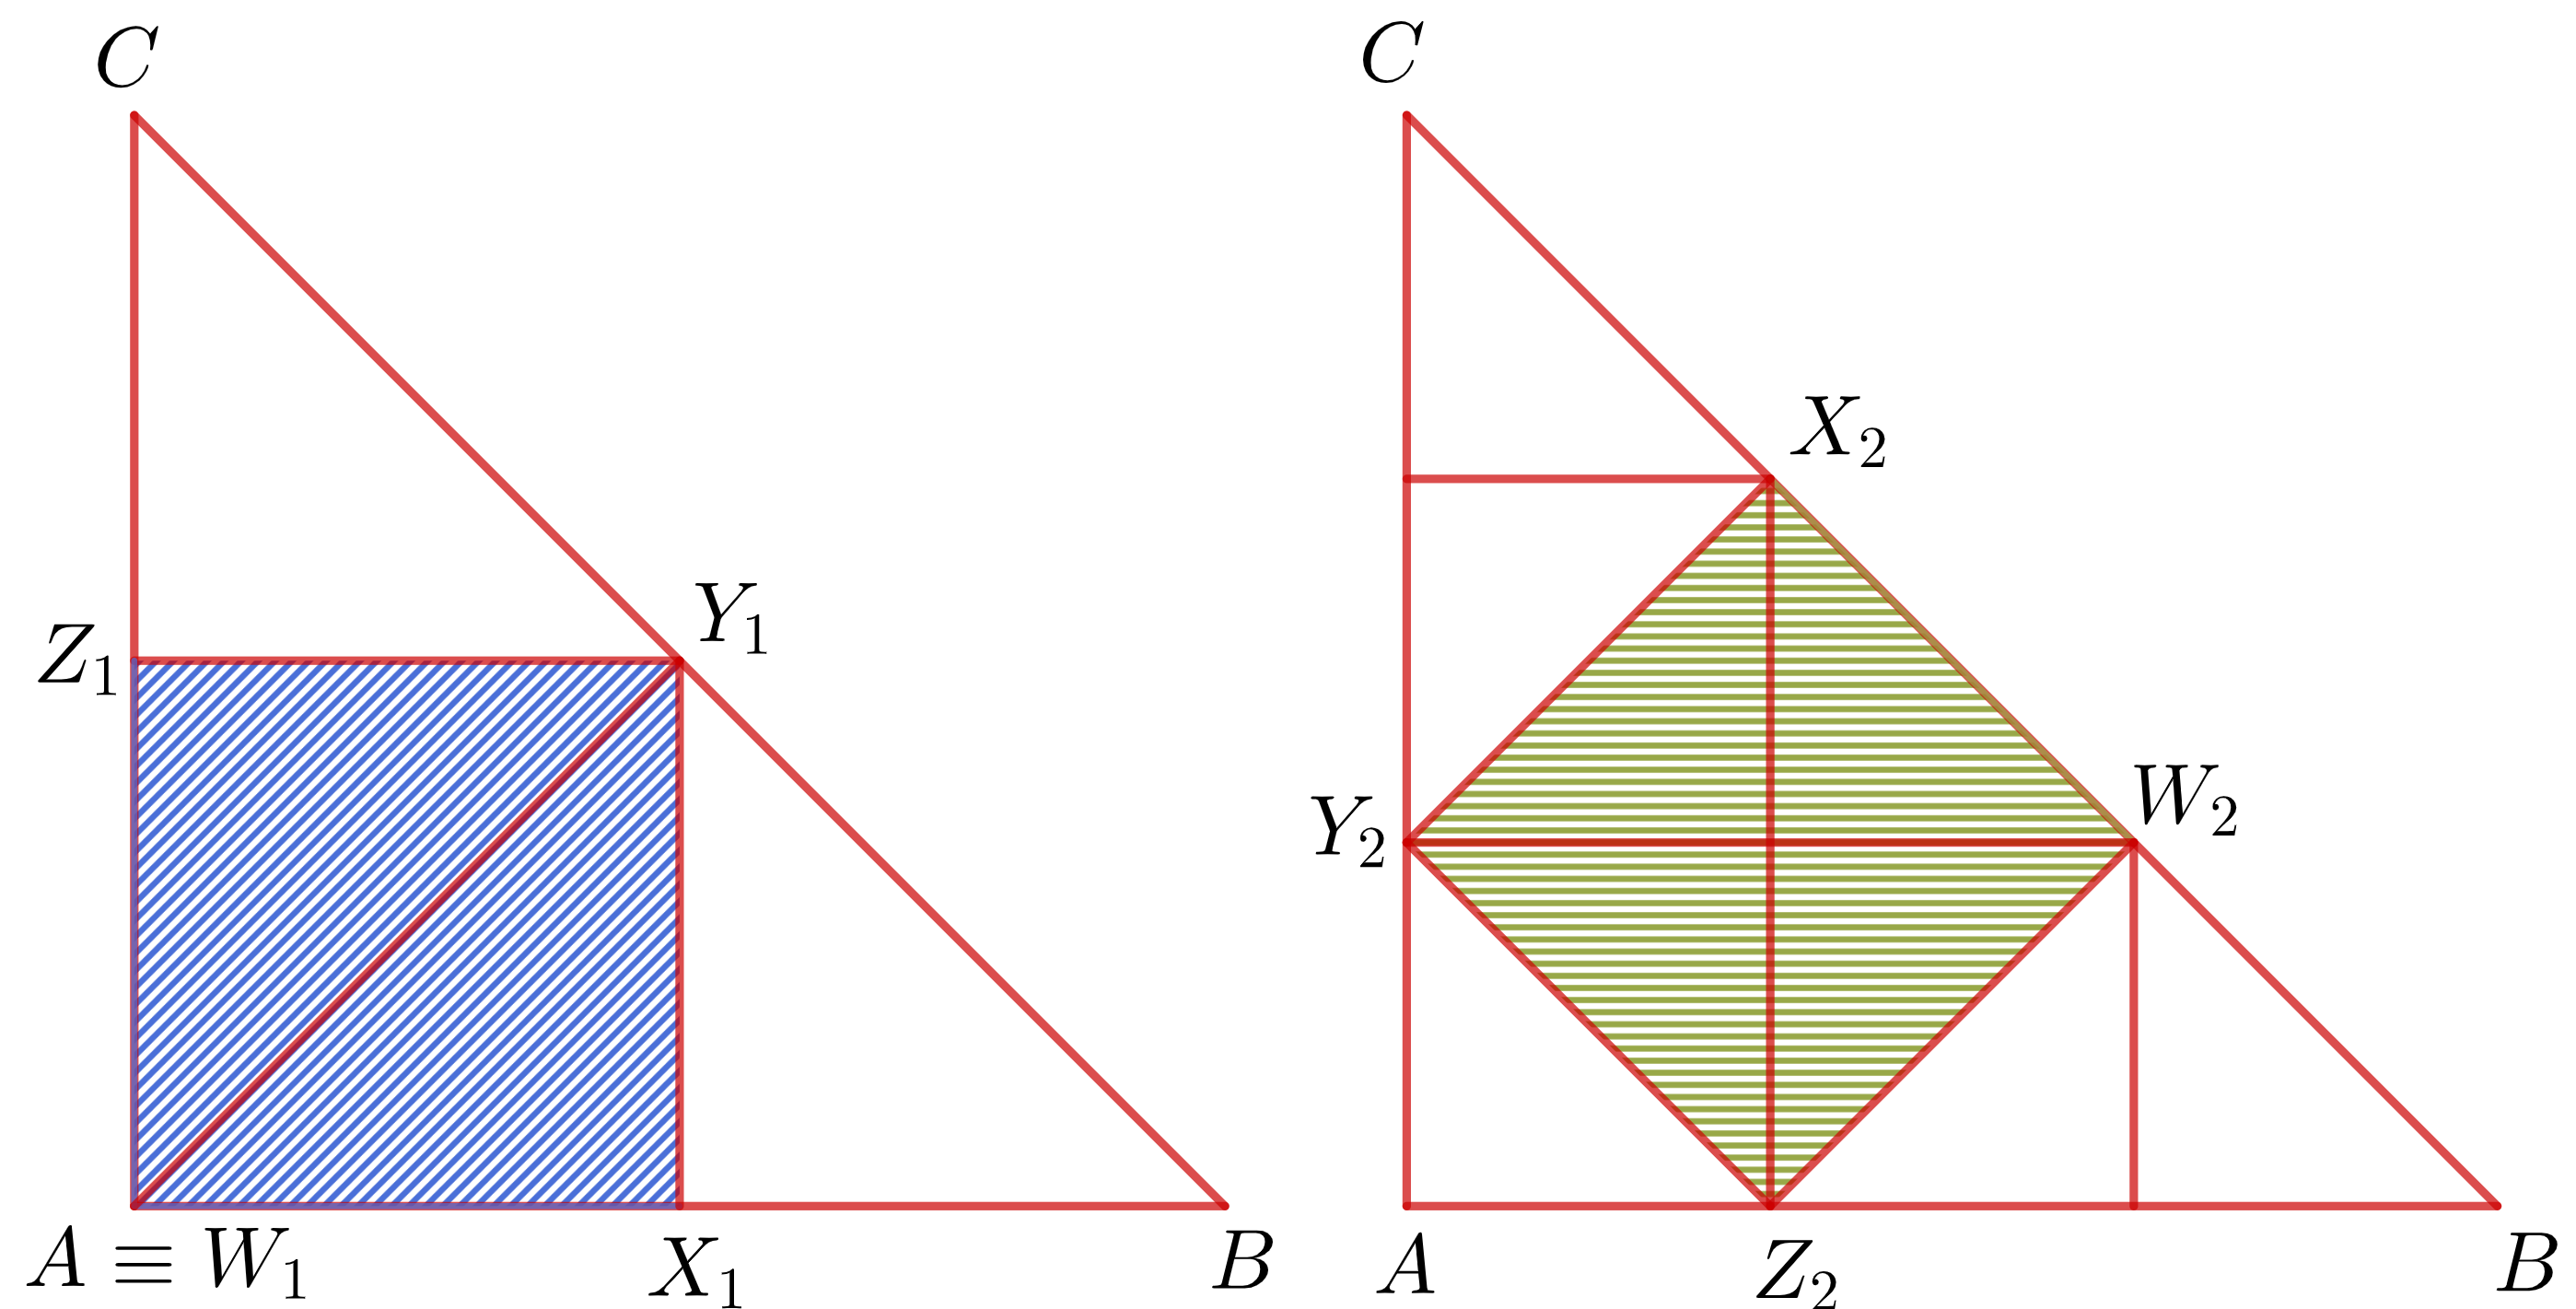 Obrázok 1: Servítky rozdelené na menšie trojuholníky